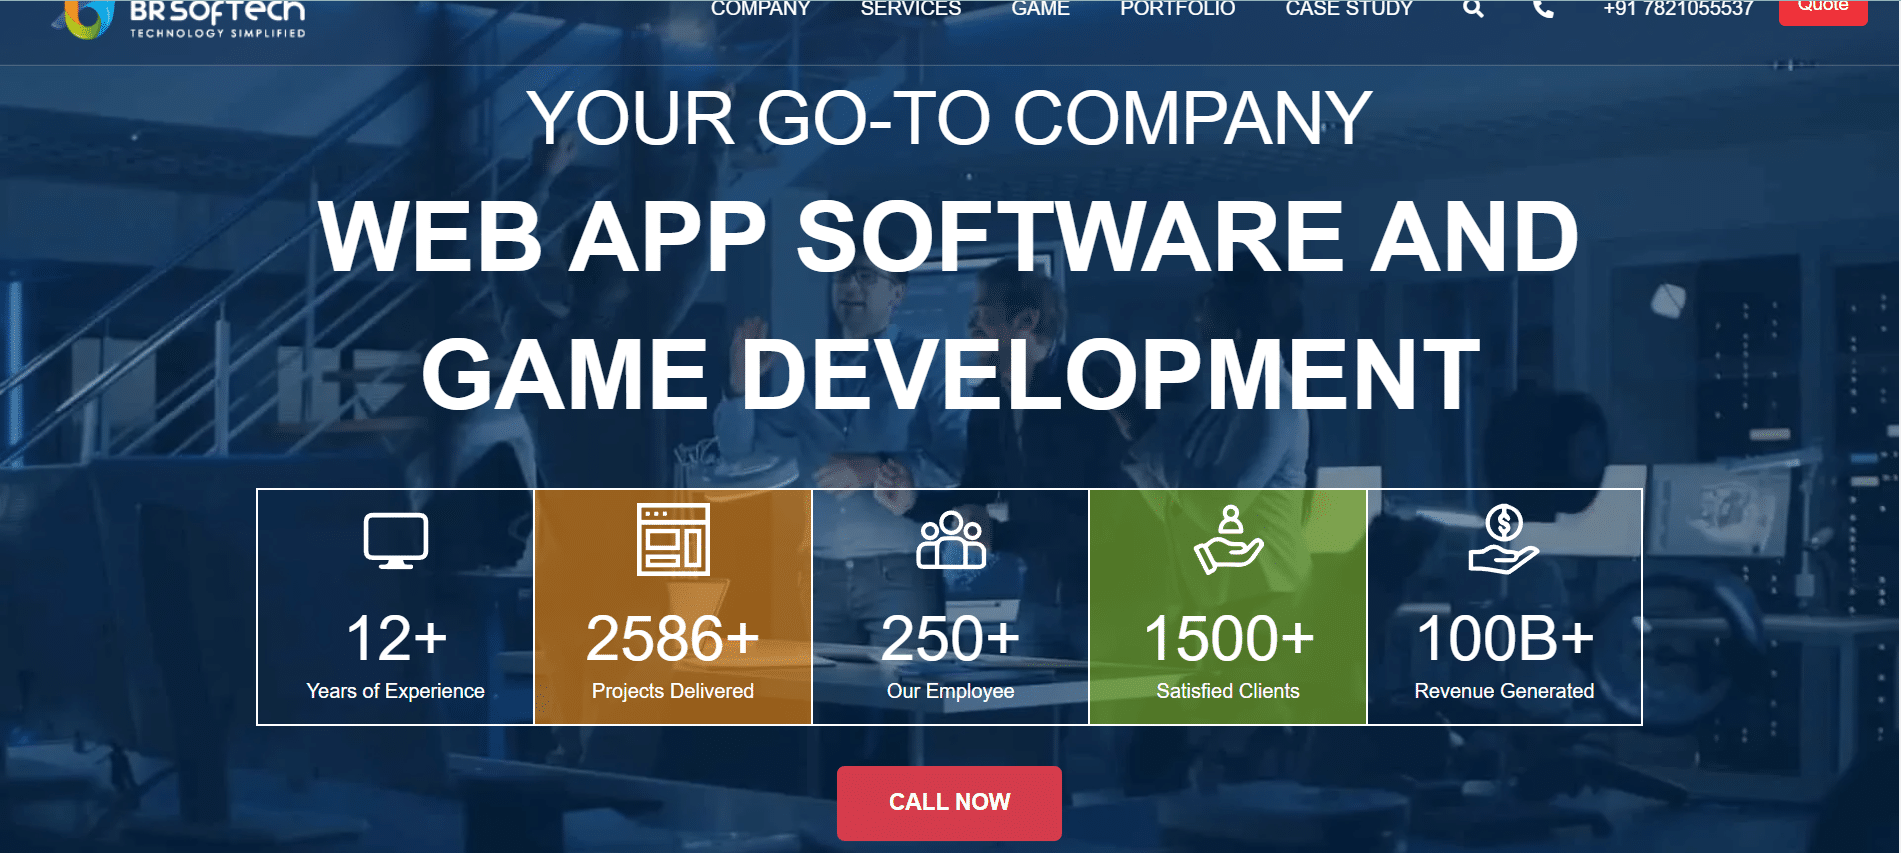 BR Softech Gaming Marketplace Development Company